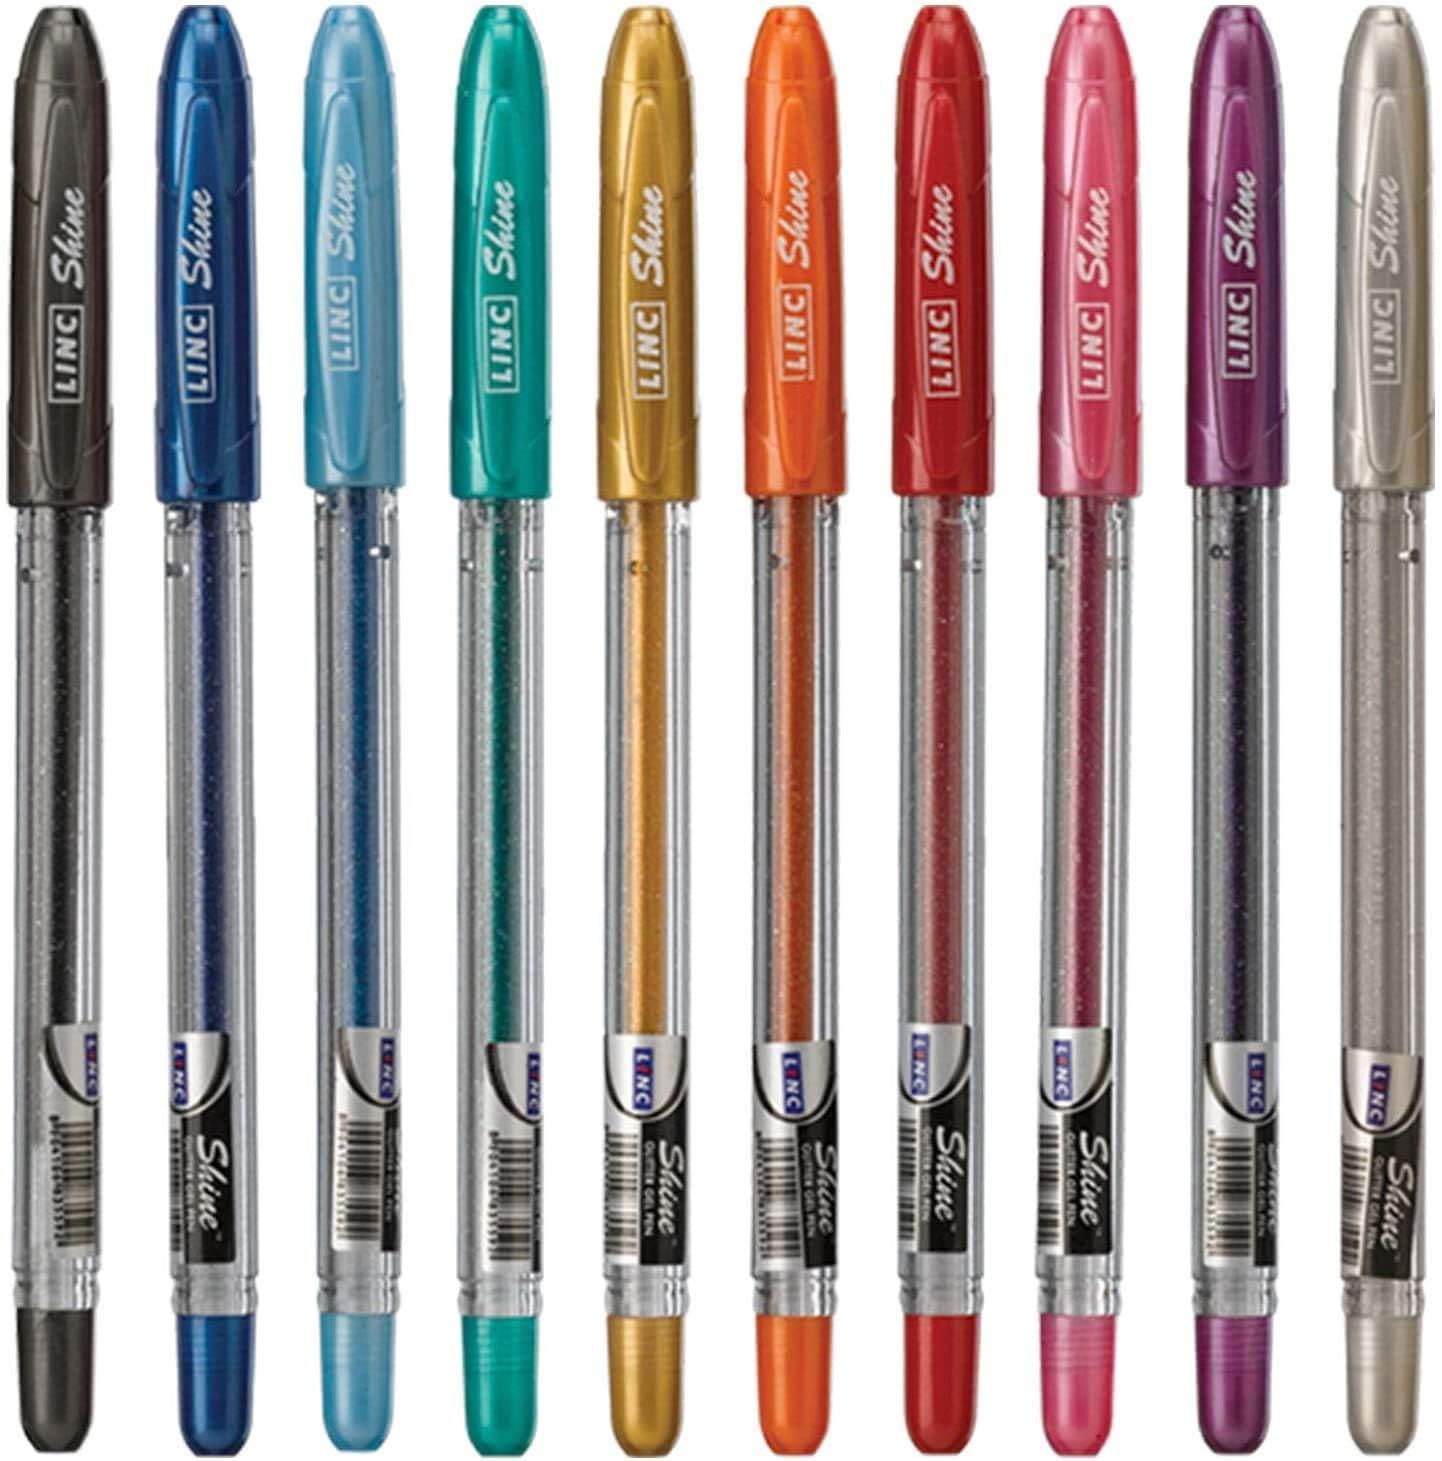 Shine glitter gel pen 10 pk - Assorted | Amazon (US)